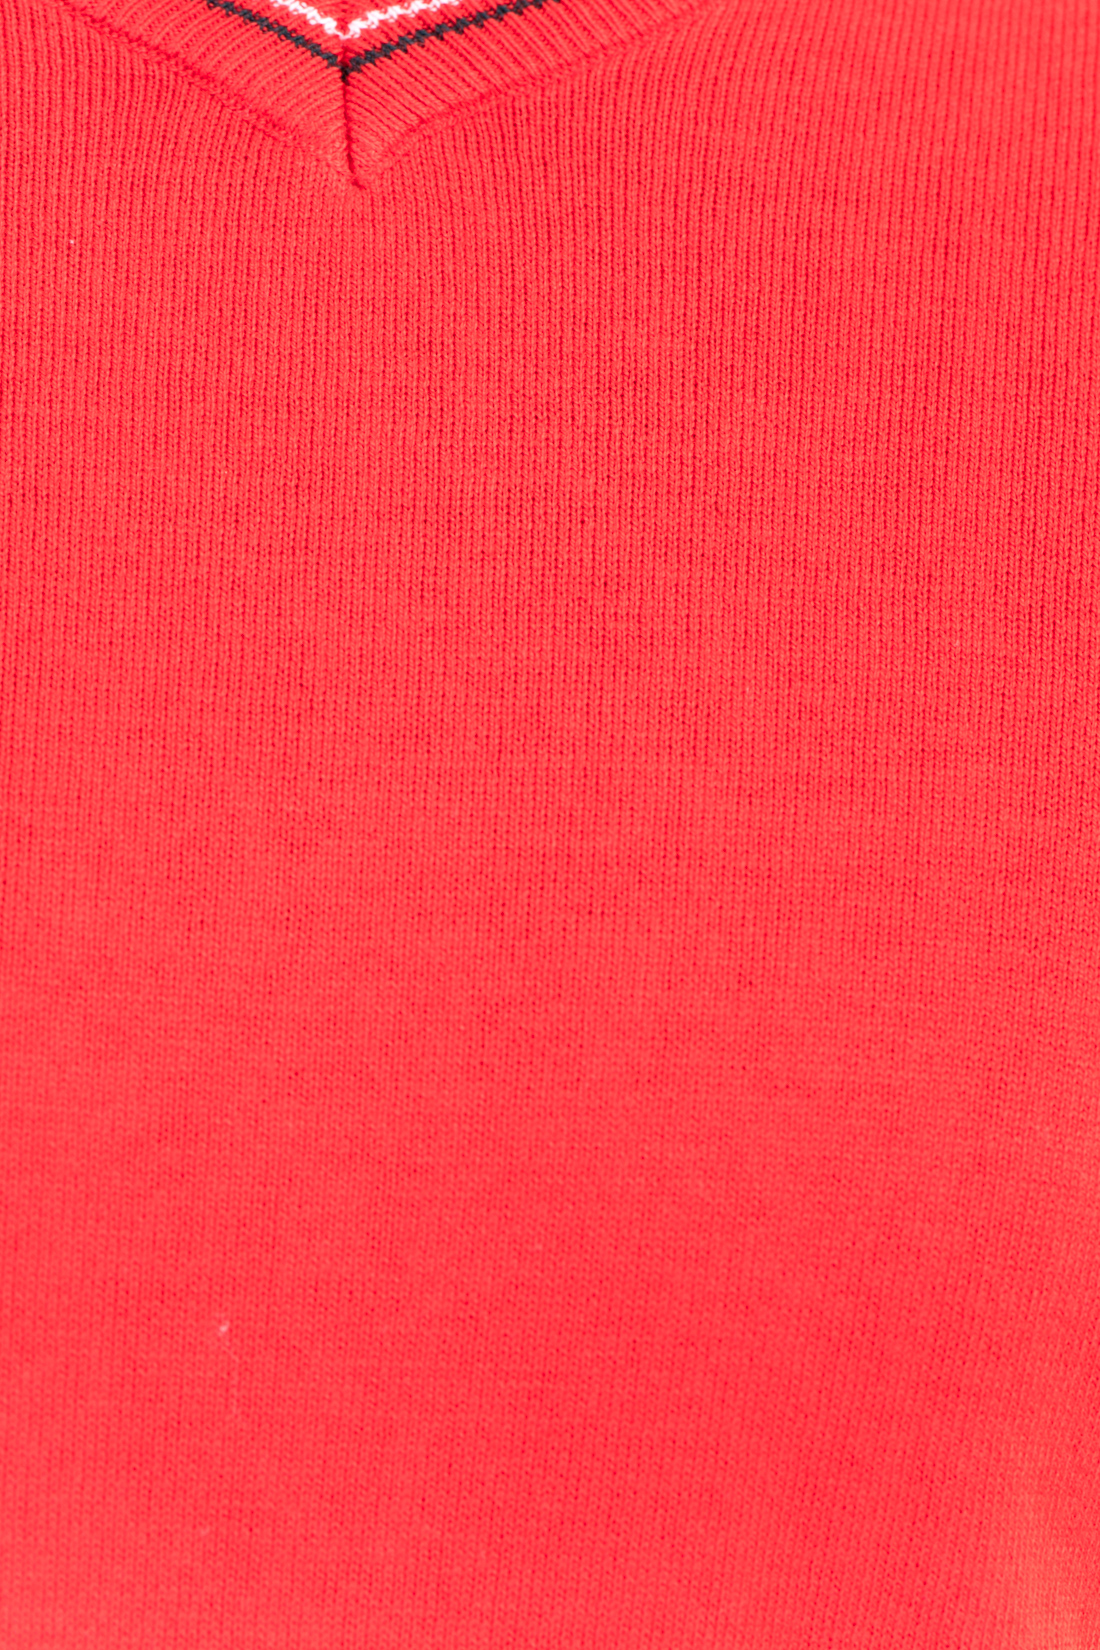 Пуловер с окантовкой на вырезе (арт. baon B637004), размер M, цвет красный Пуловер с окантовкой на вырезе (арт. baon B637004) - фото 4